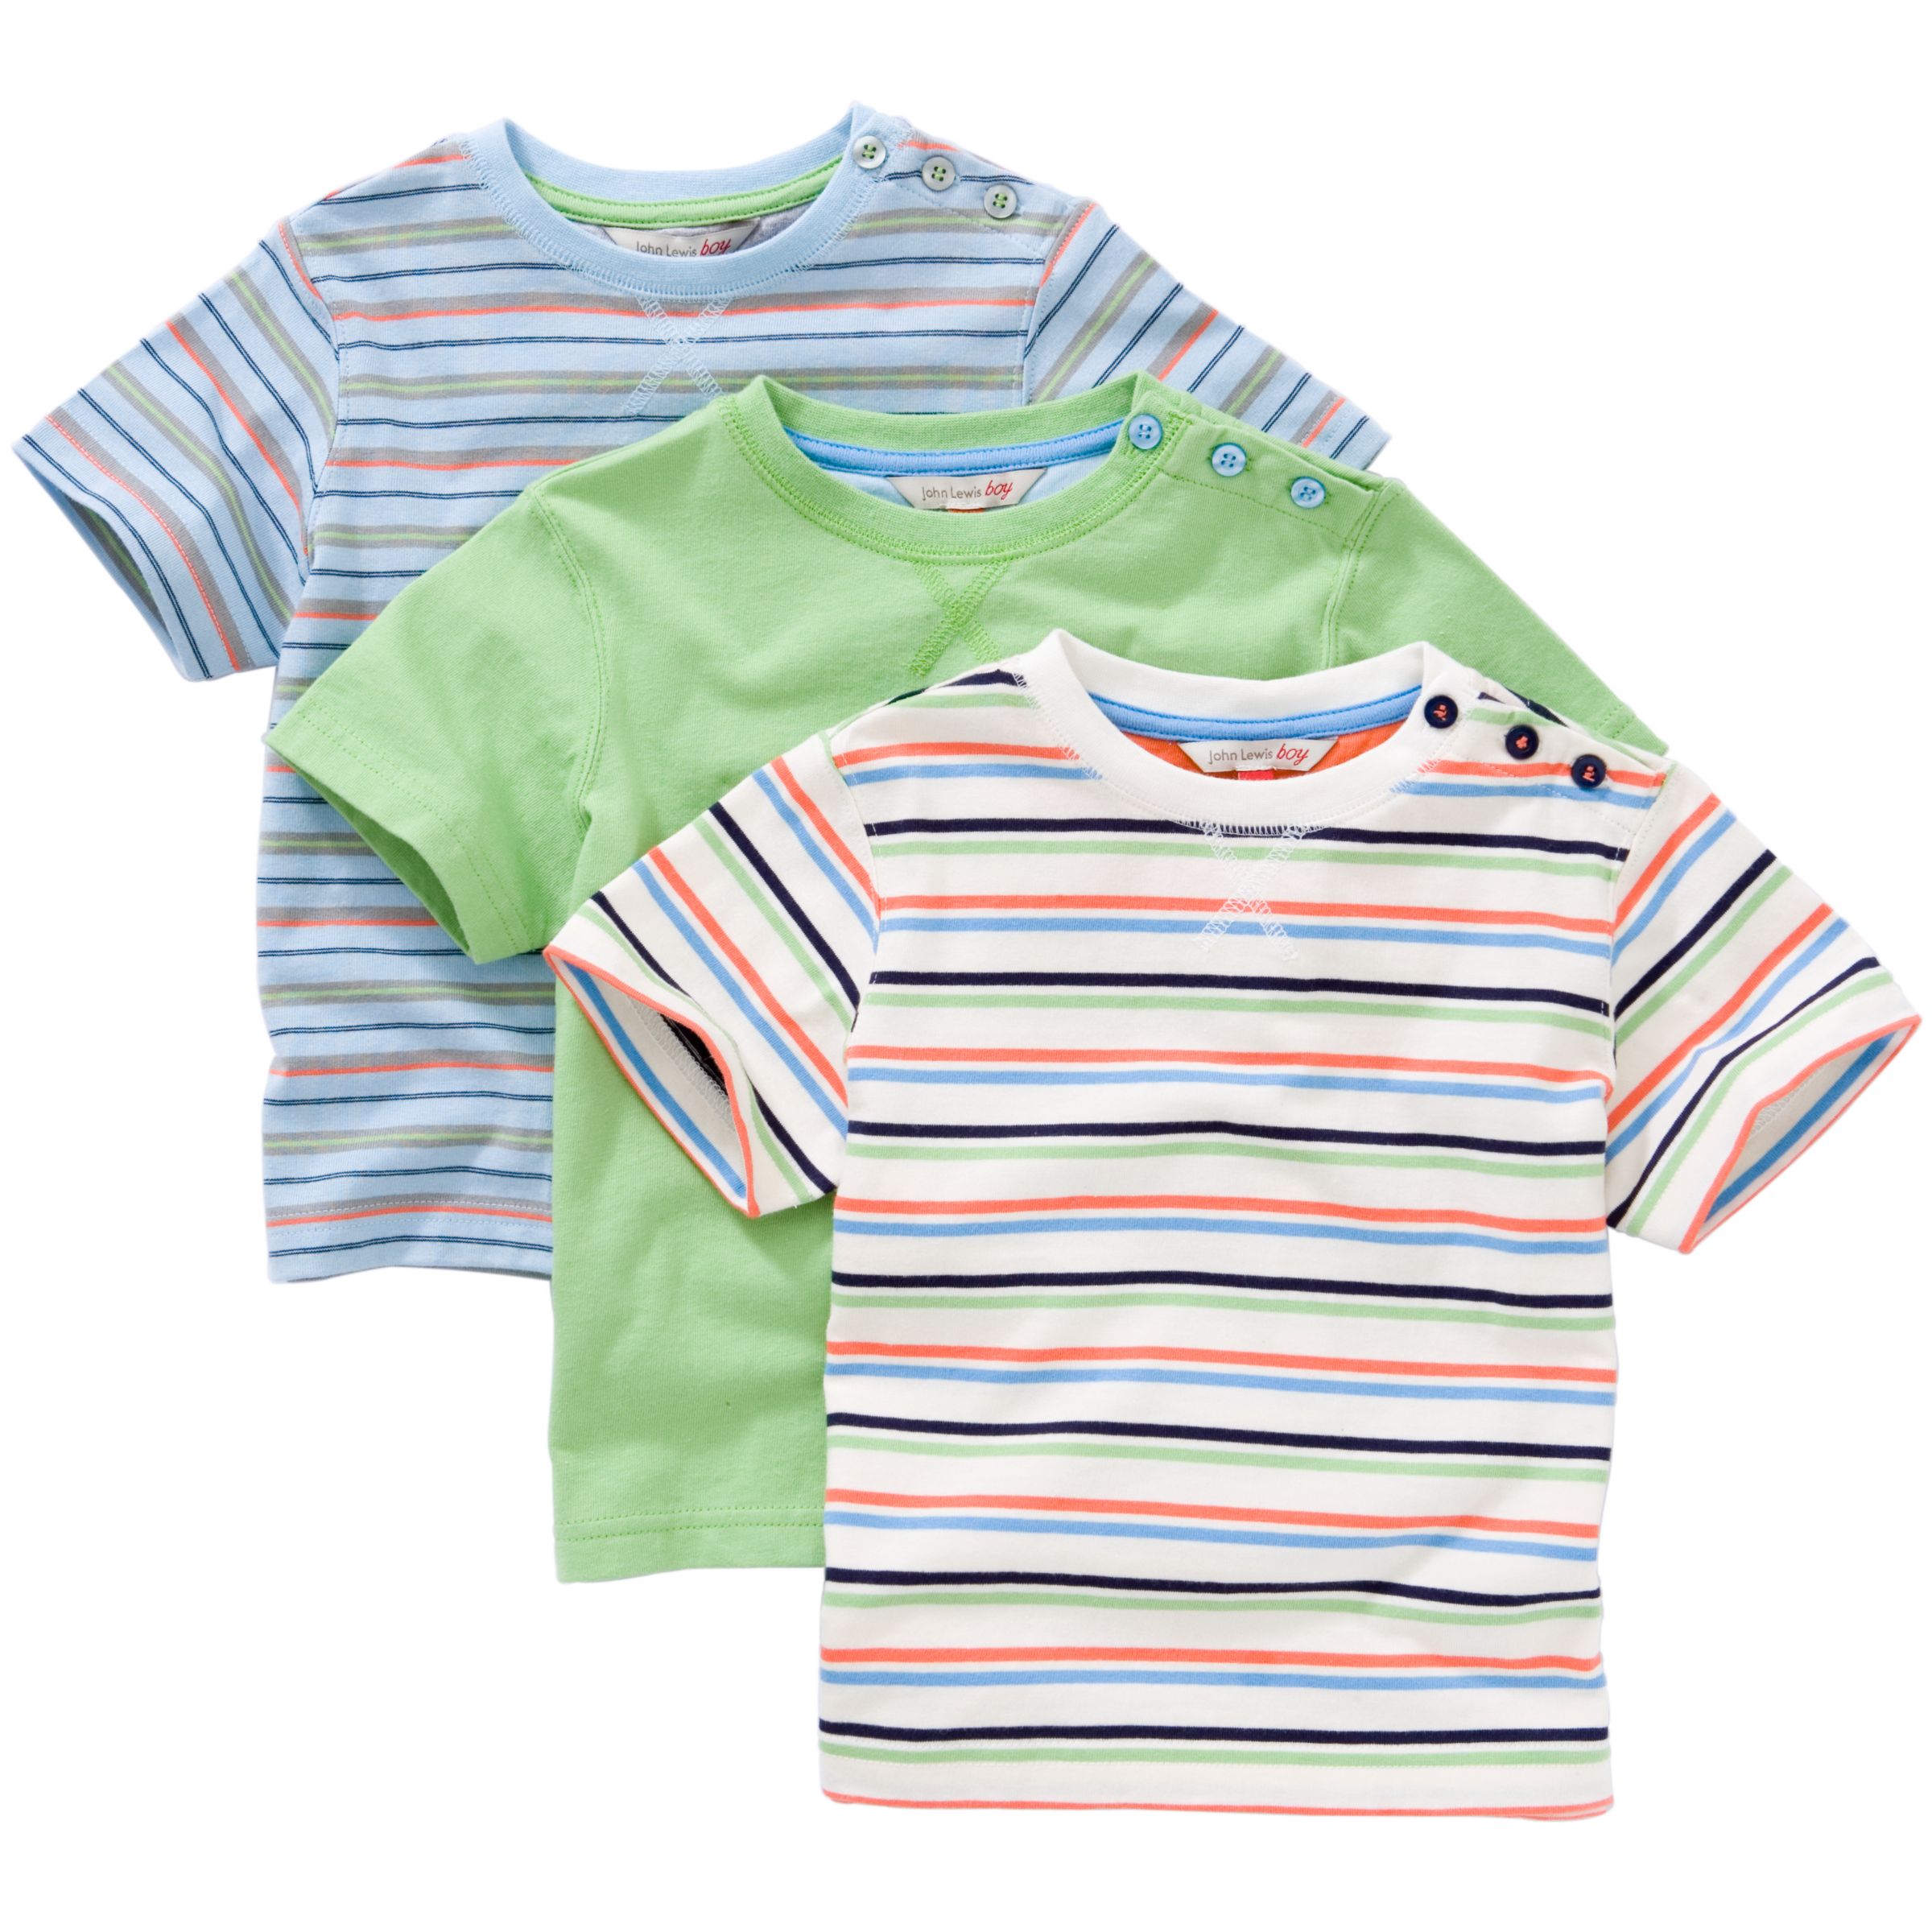 Stripe Print T-Shirts, Pack of 3,